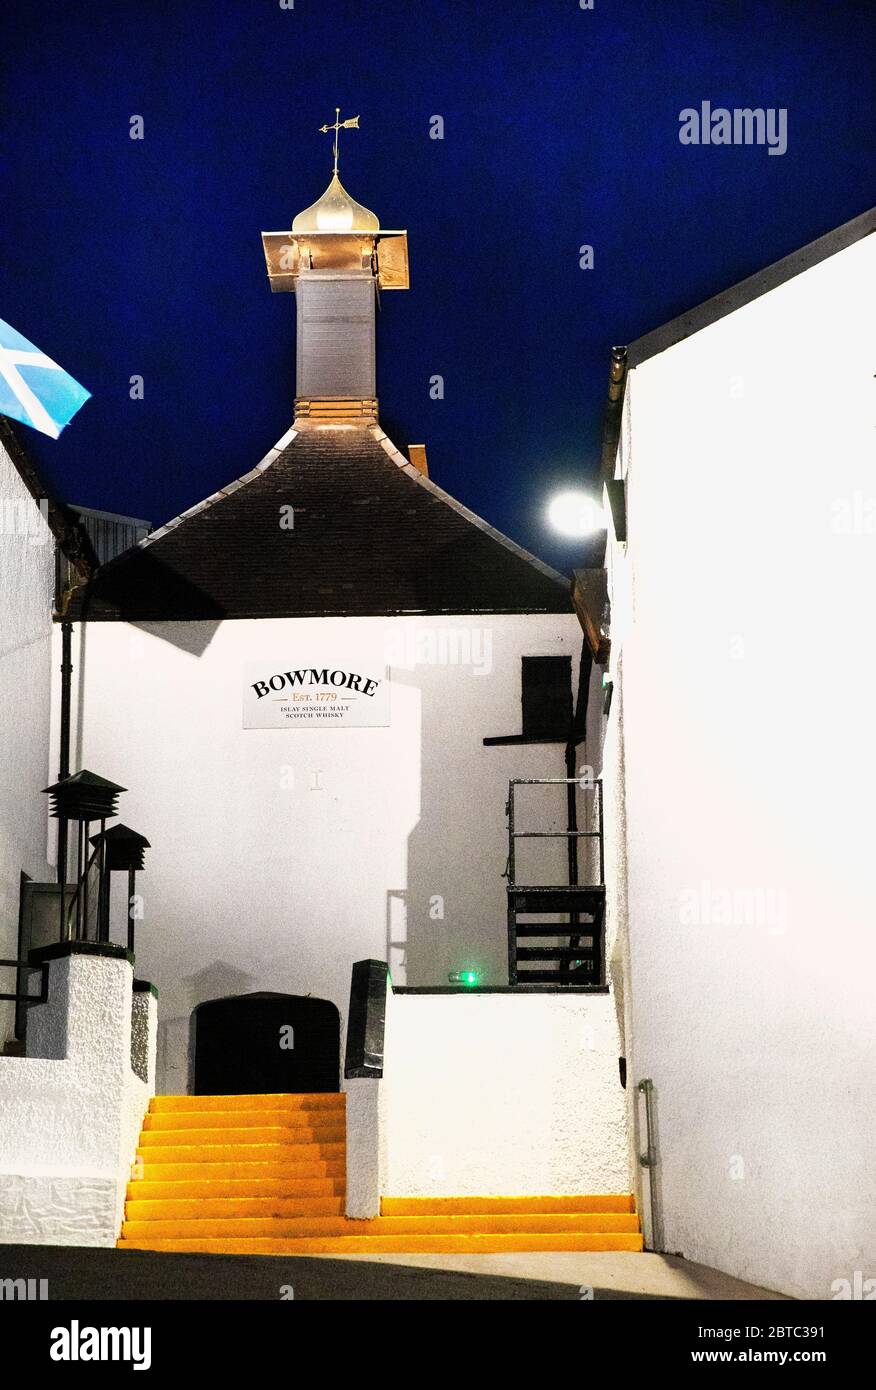 Bowmore Whisky Distillery, Isle of Islay, Inner Hebridies, Scotland. Stock Photo